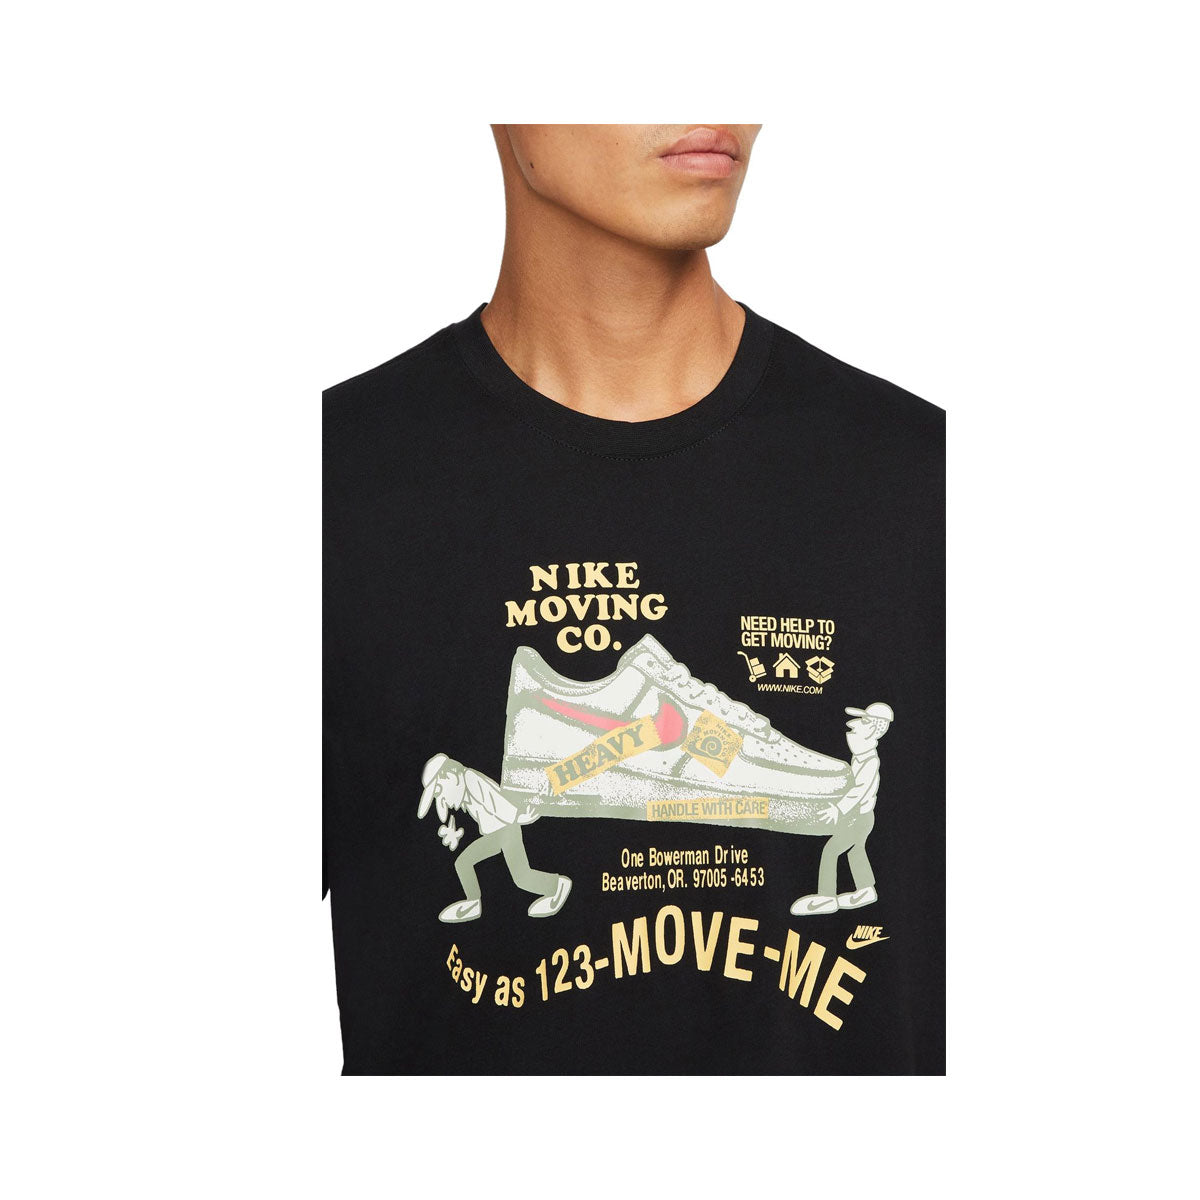 Nike Men's Sportswear Moving Co. T-Shirt Black